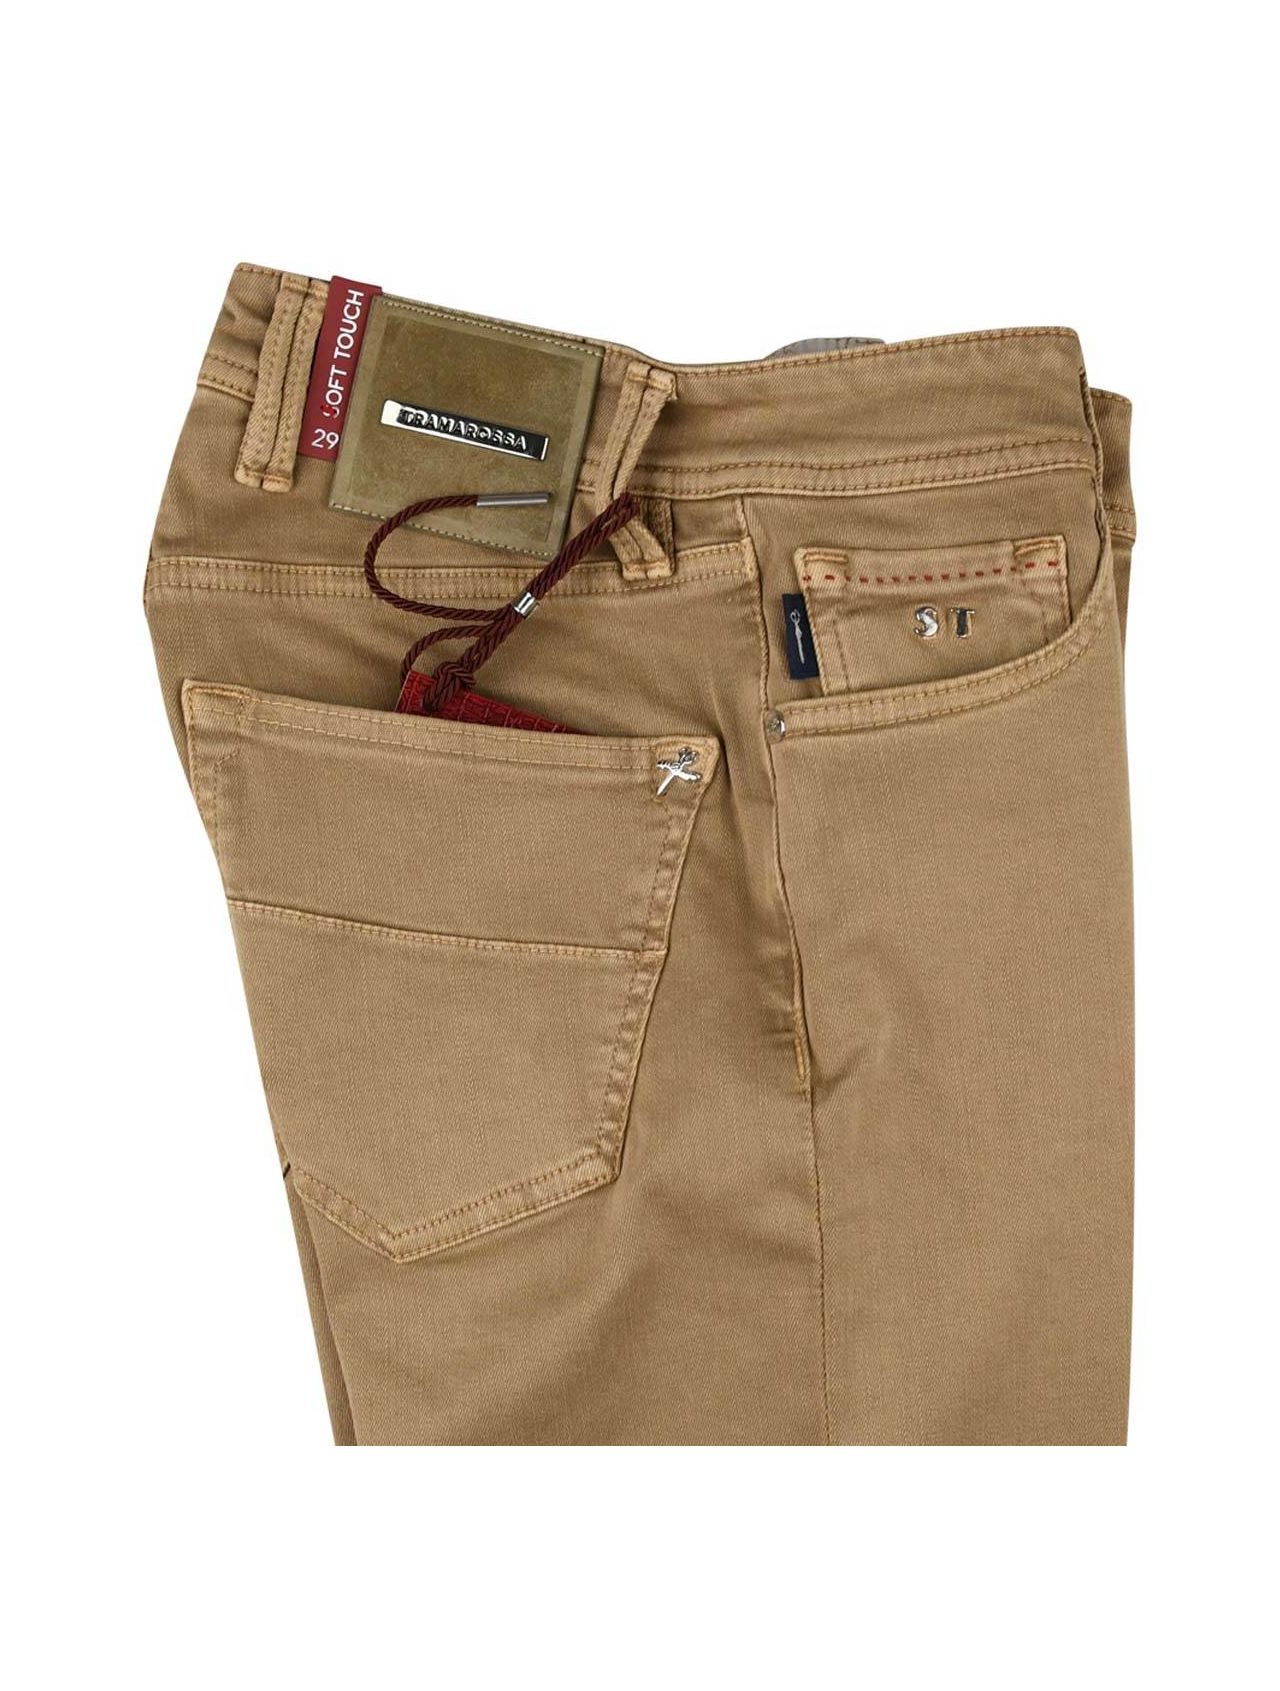 TRAMAROSSA Colour Leonardo Khaki Cotton Stretch Slim Fit Jeans Pants S